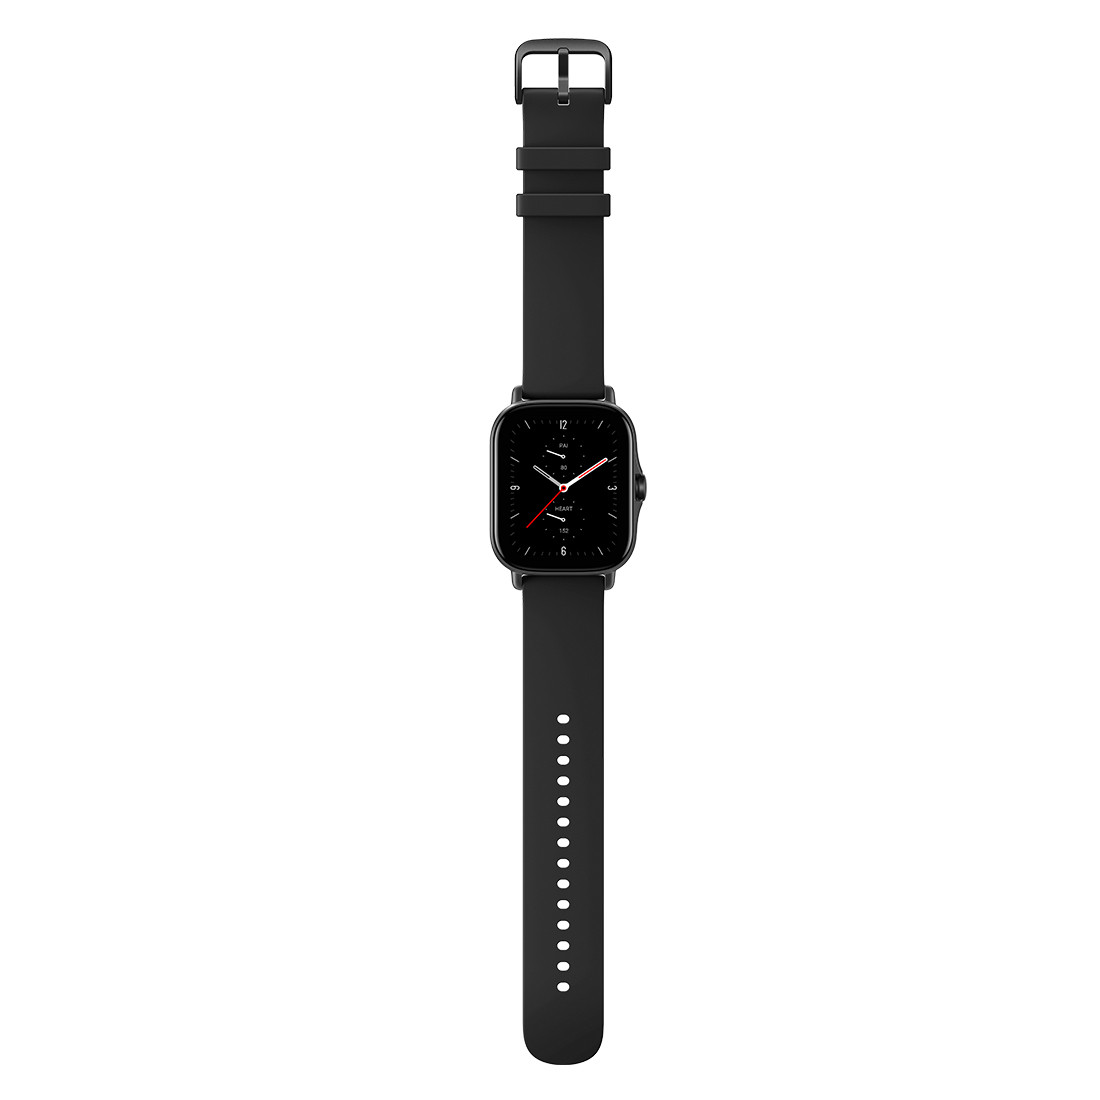 Смарт часы Amazfit GTS 2e A2021 Obsidian Black